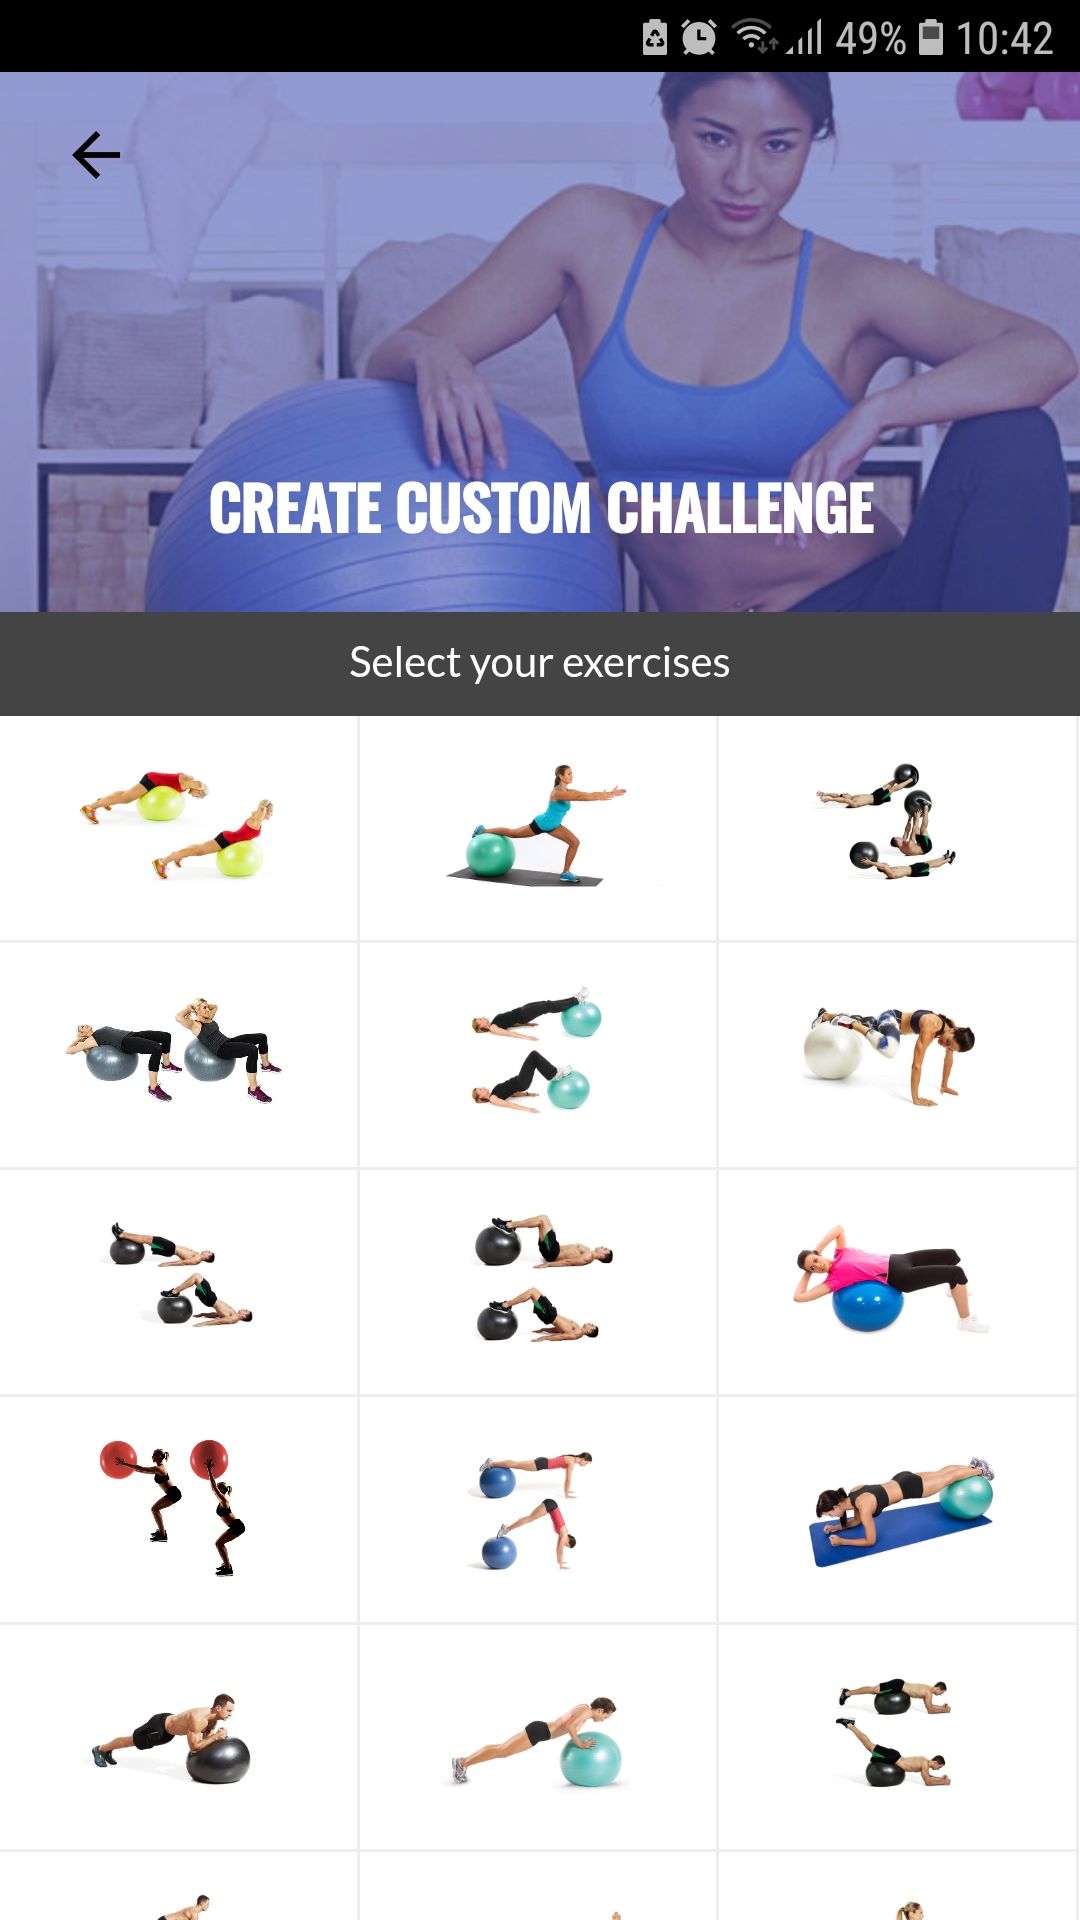 Exercise Ball Workout mobile fitness app custom